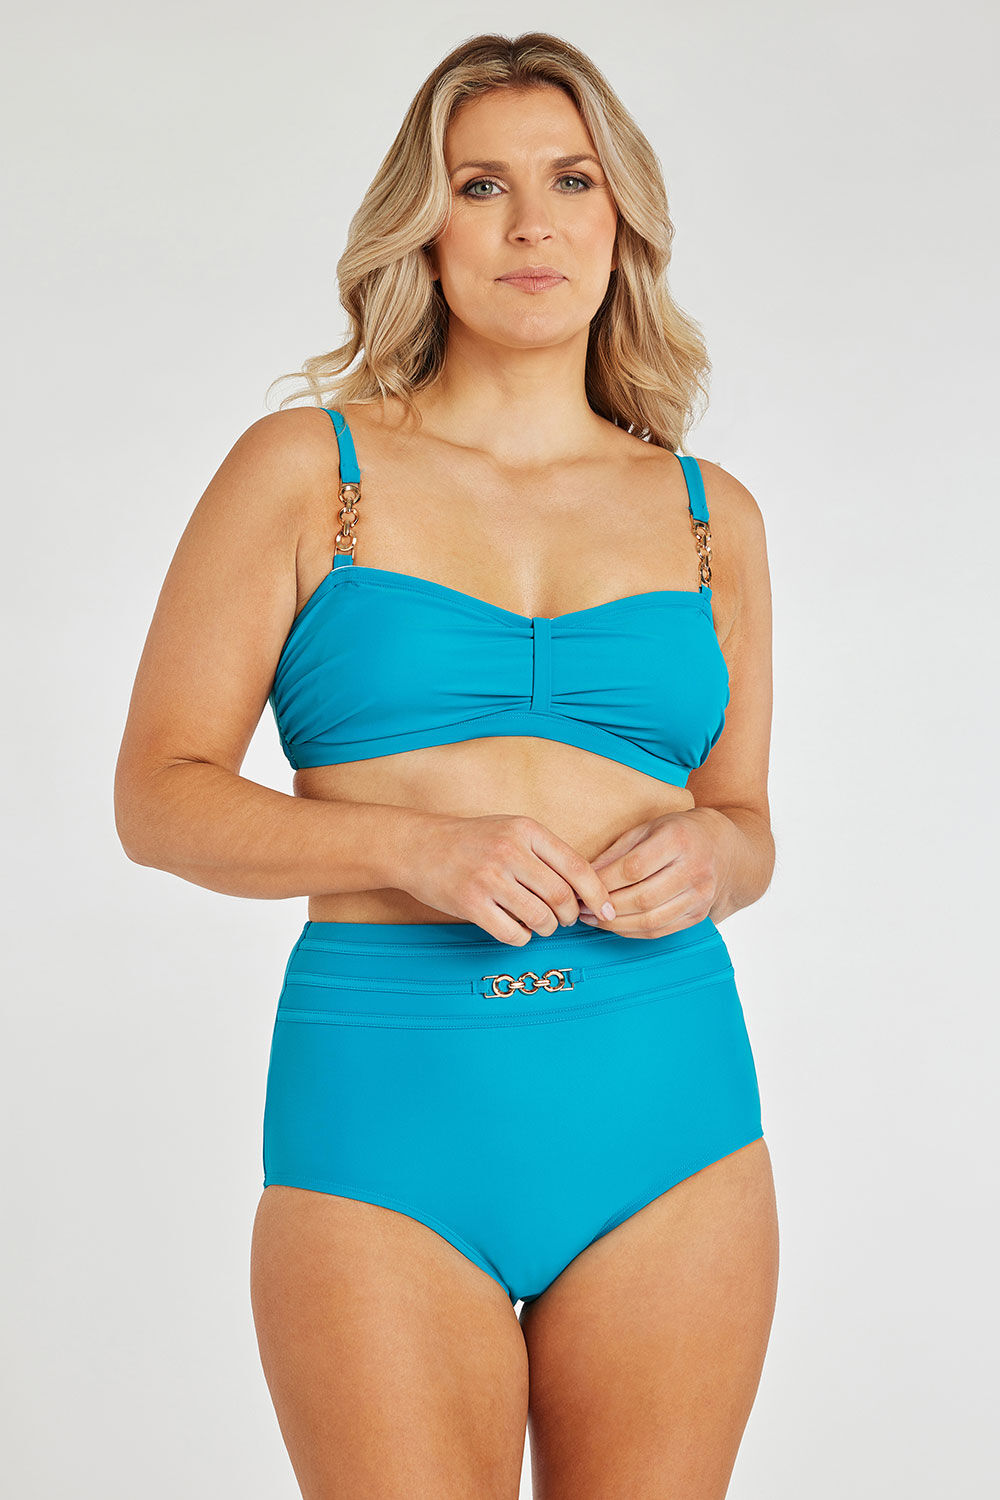 Bonmarche Aqua Bikini Top With Chain Trim, Size: 12